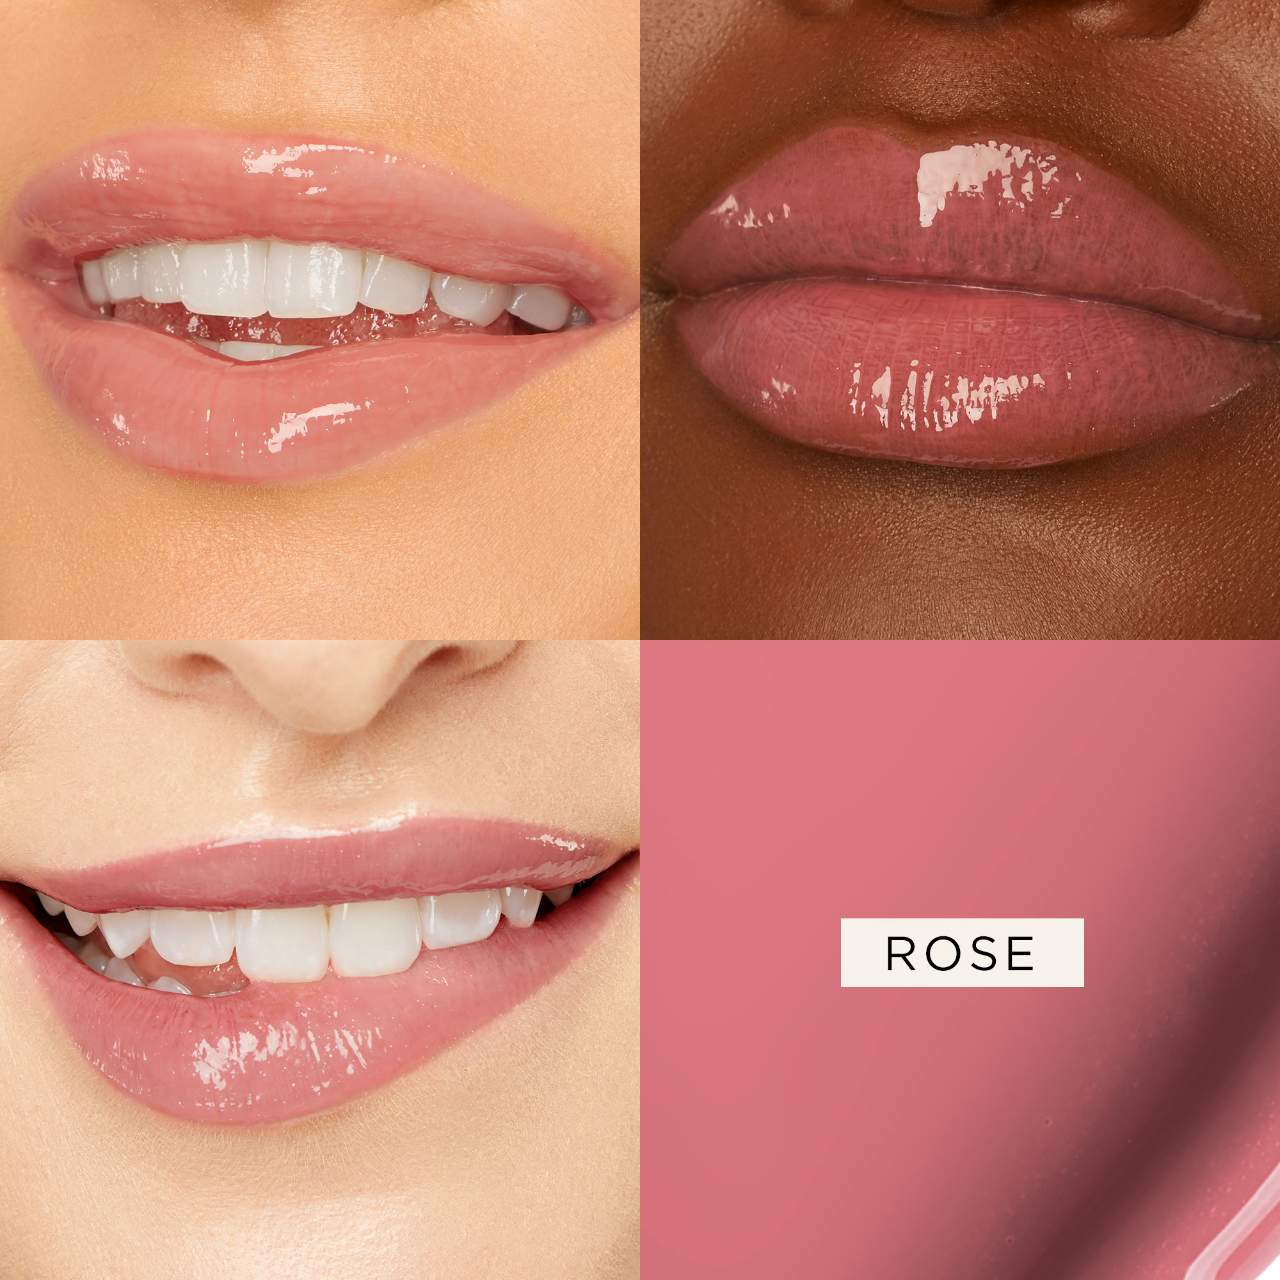 mini maracuja juicy lip rosy essentials set